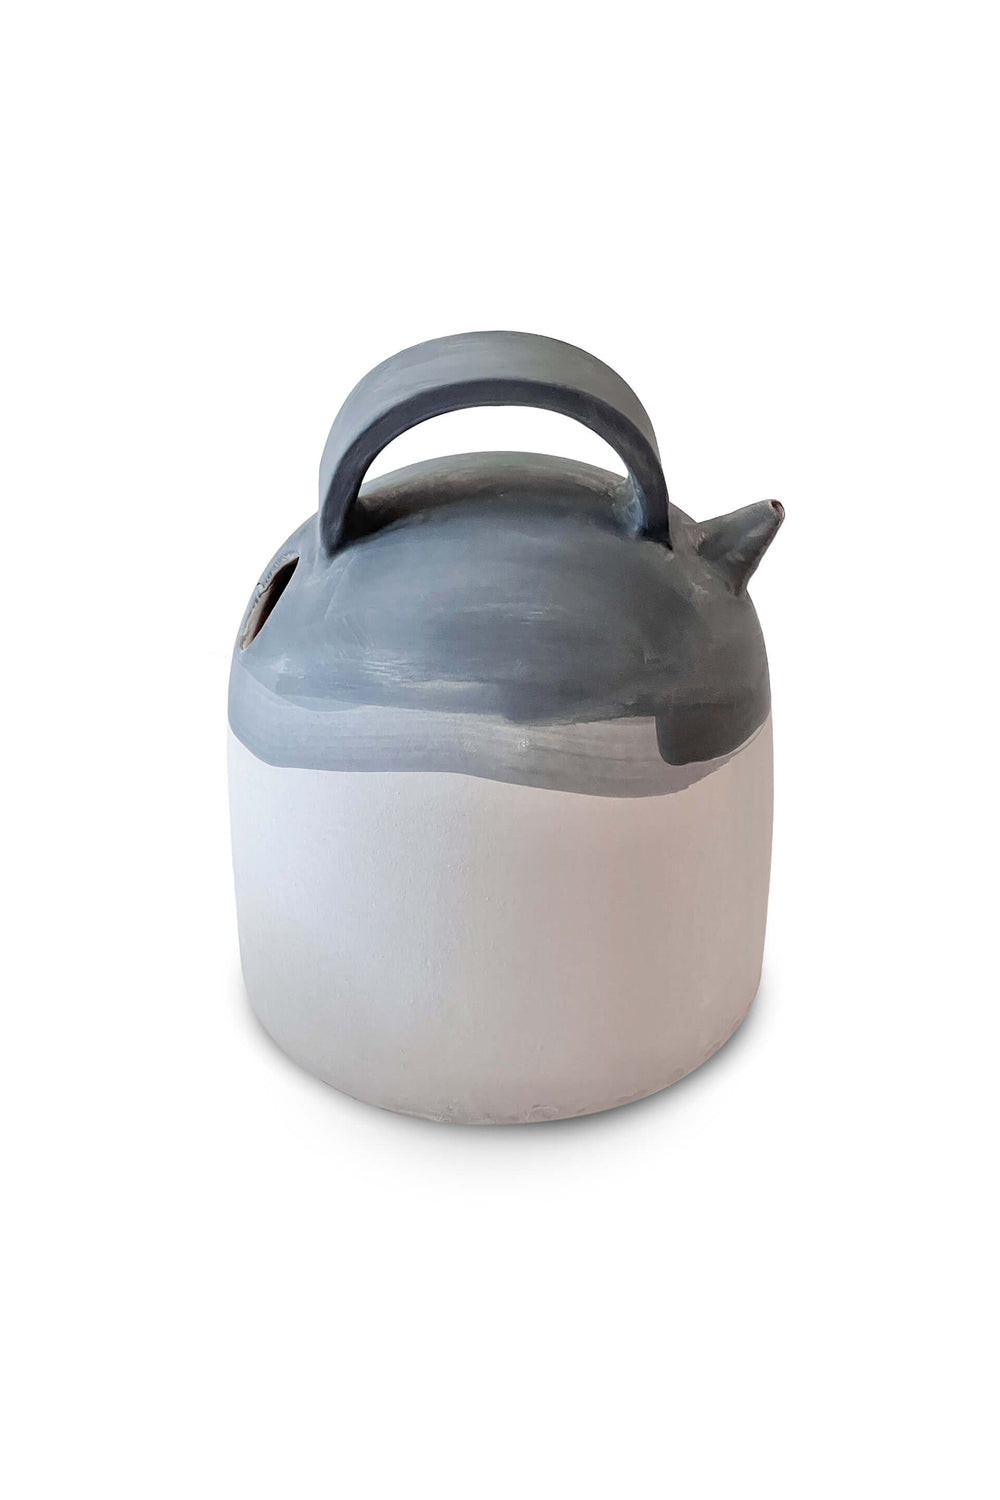 Artisanal earthenware pitcher